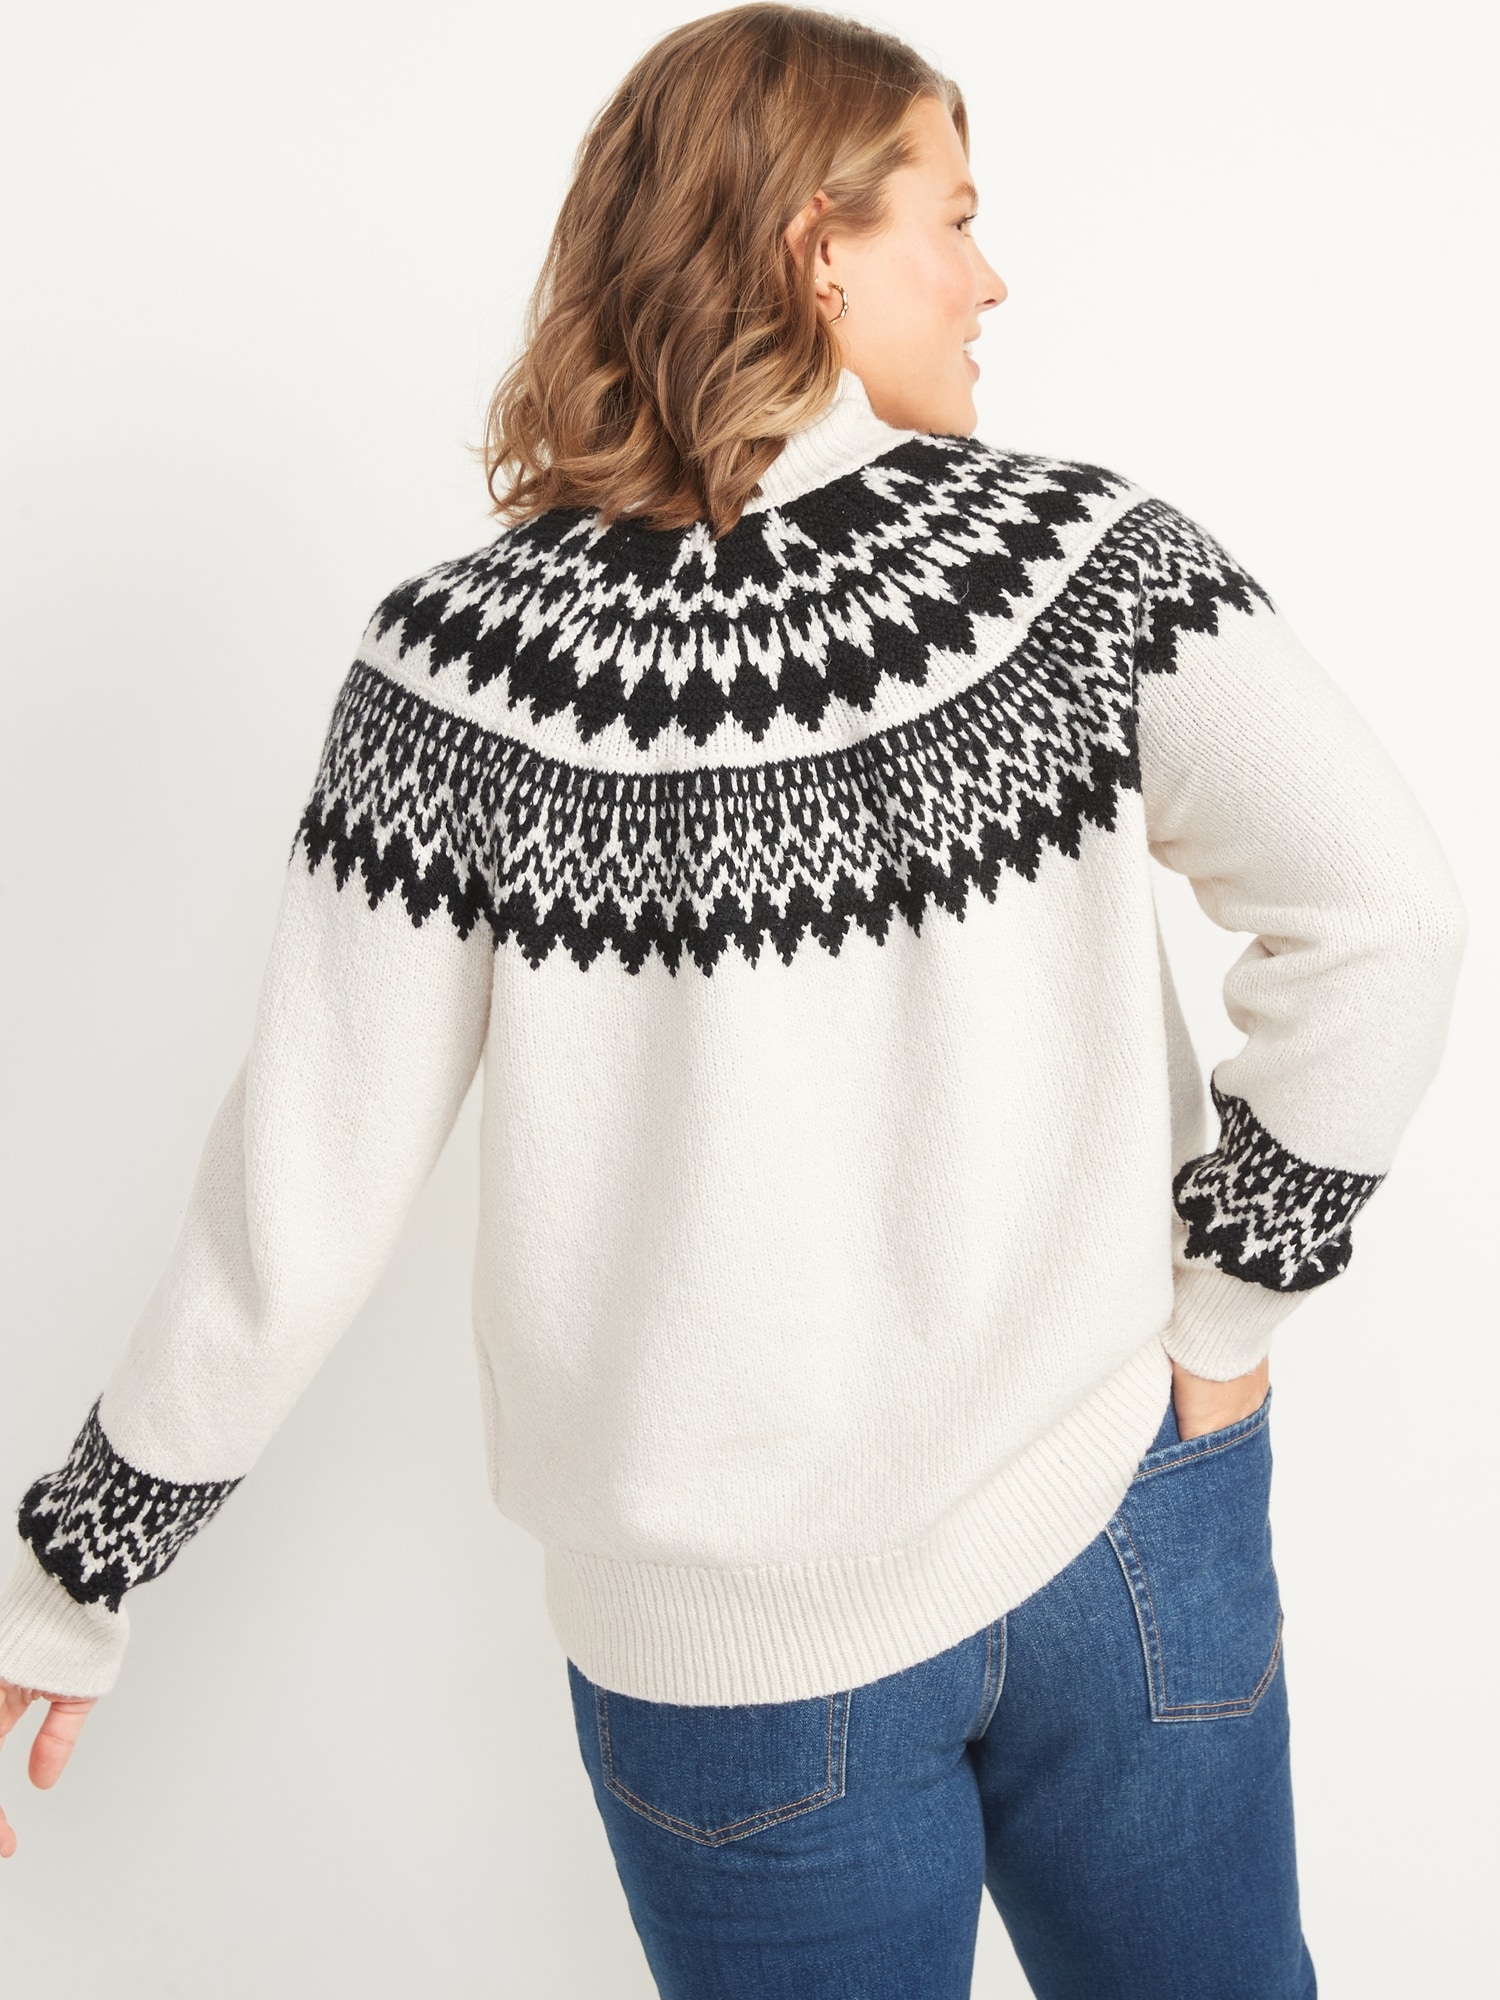 Cozy Fair Isle Turtleneck Sweater for Women | Old Navy